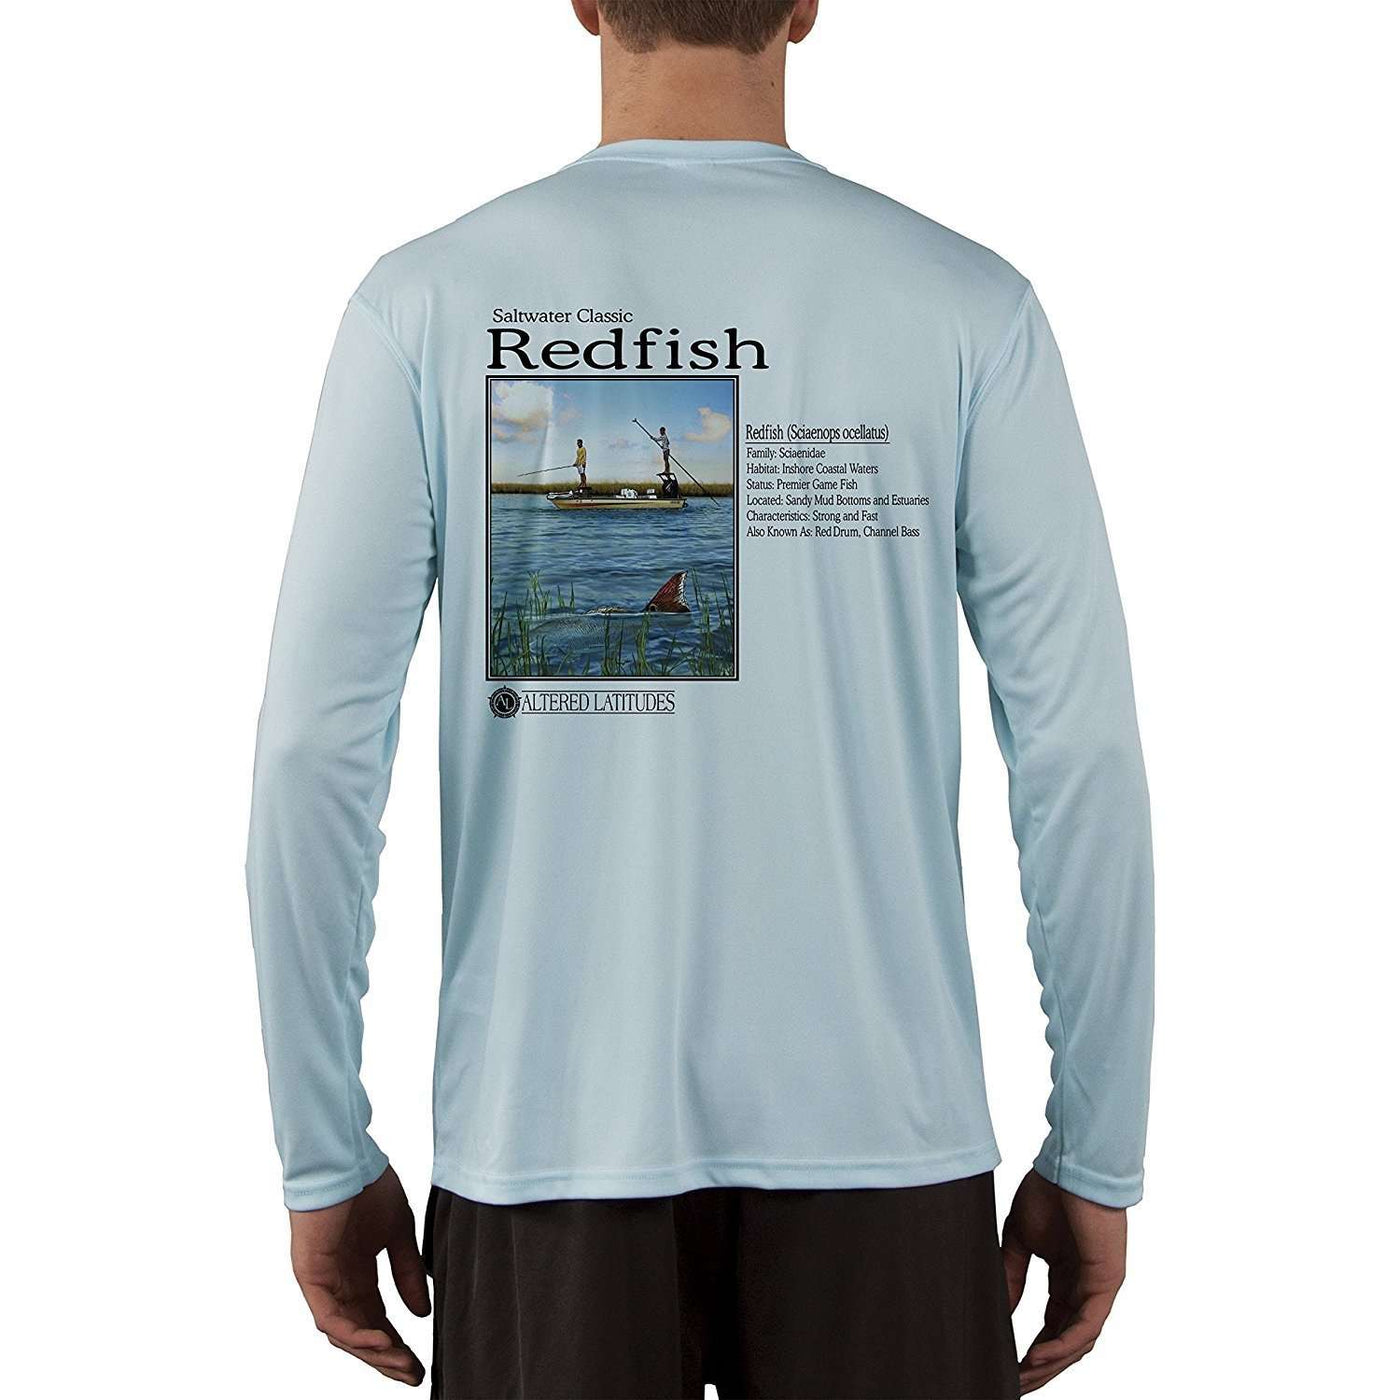 Saltwater Classic Redfish Men's UPF 50+ UV/Sun Protection Long Sleeve T-Shirt